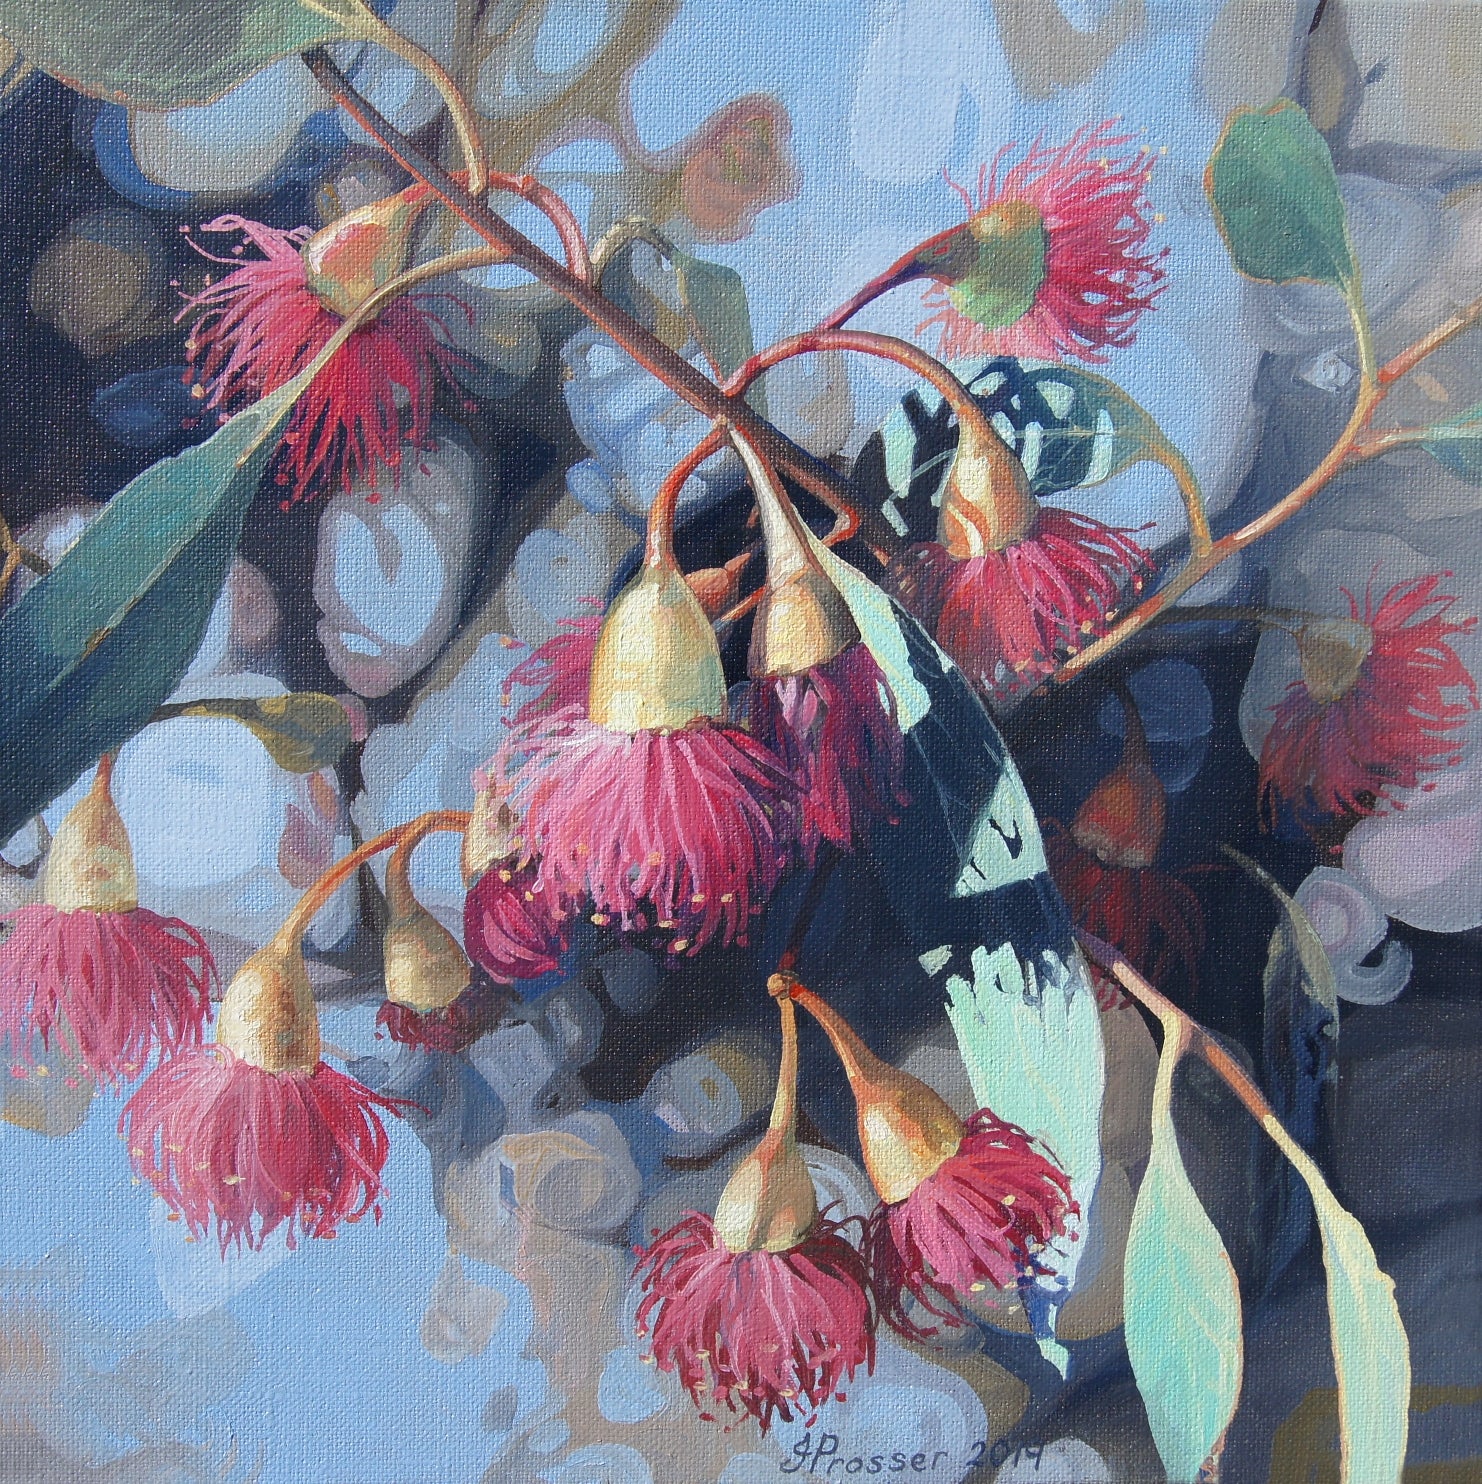 Jaime Prosser painting of red gum tree flowers